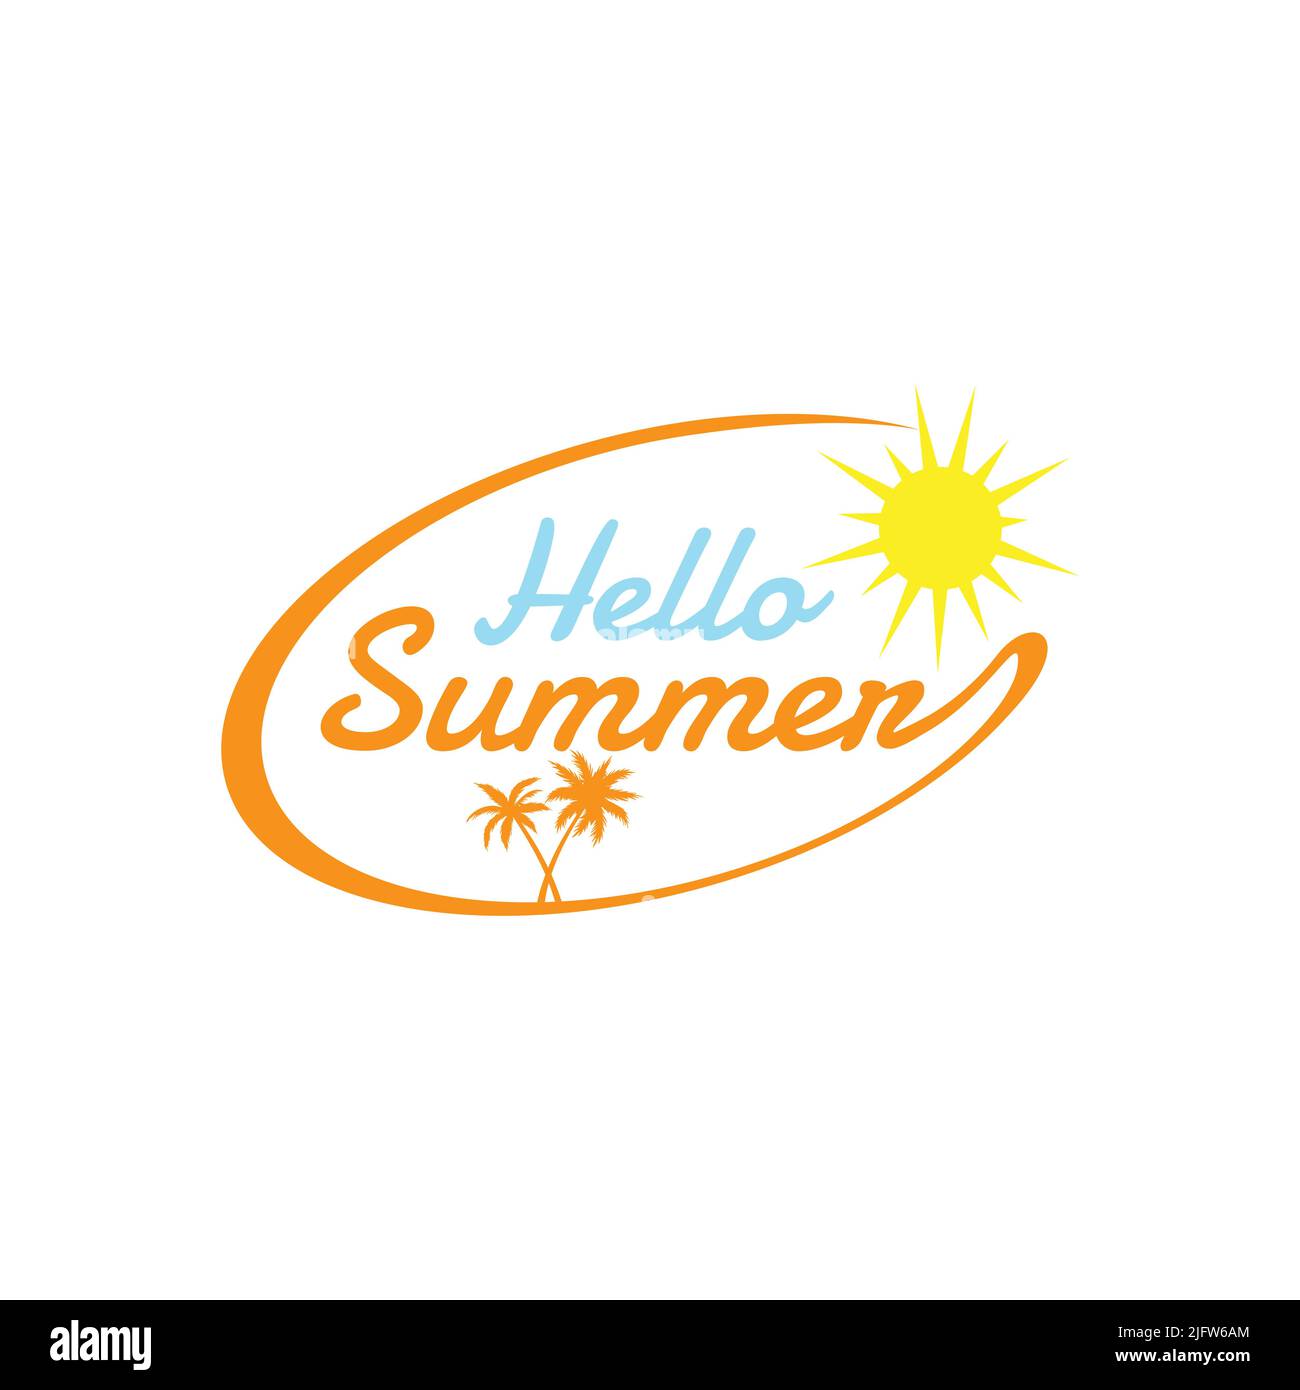 Hello summer image typography vector design image. Summer day theme vector image design illustration Stock Vector